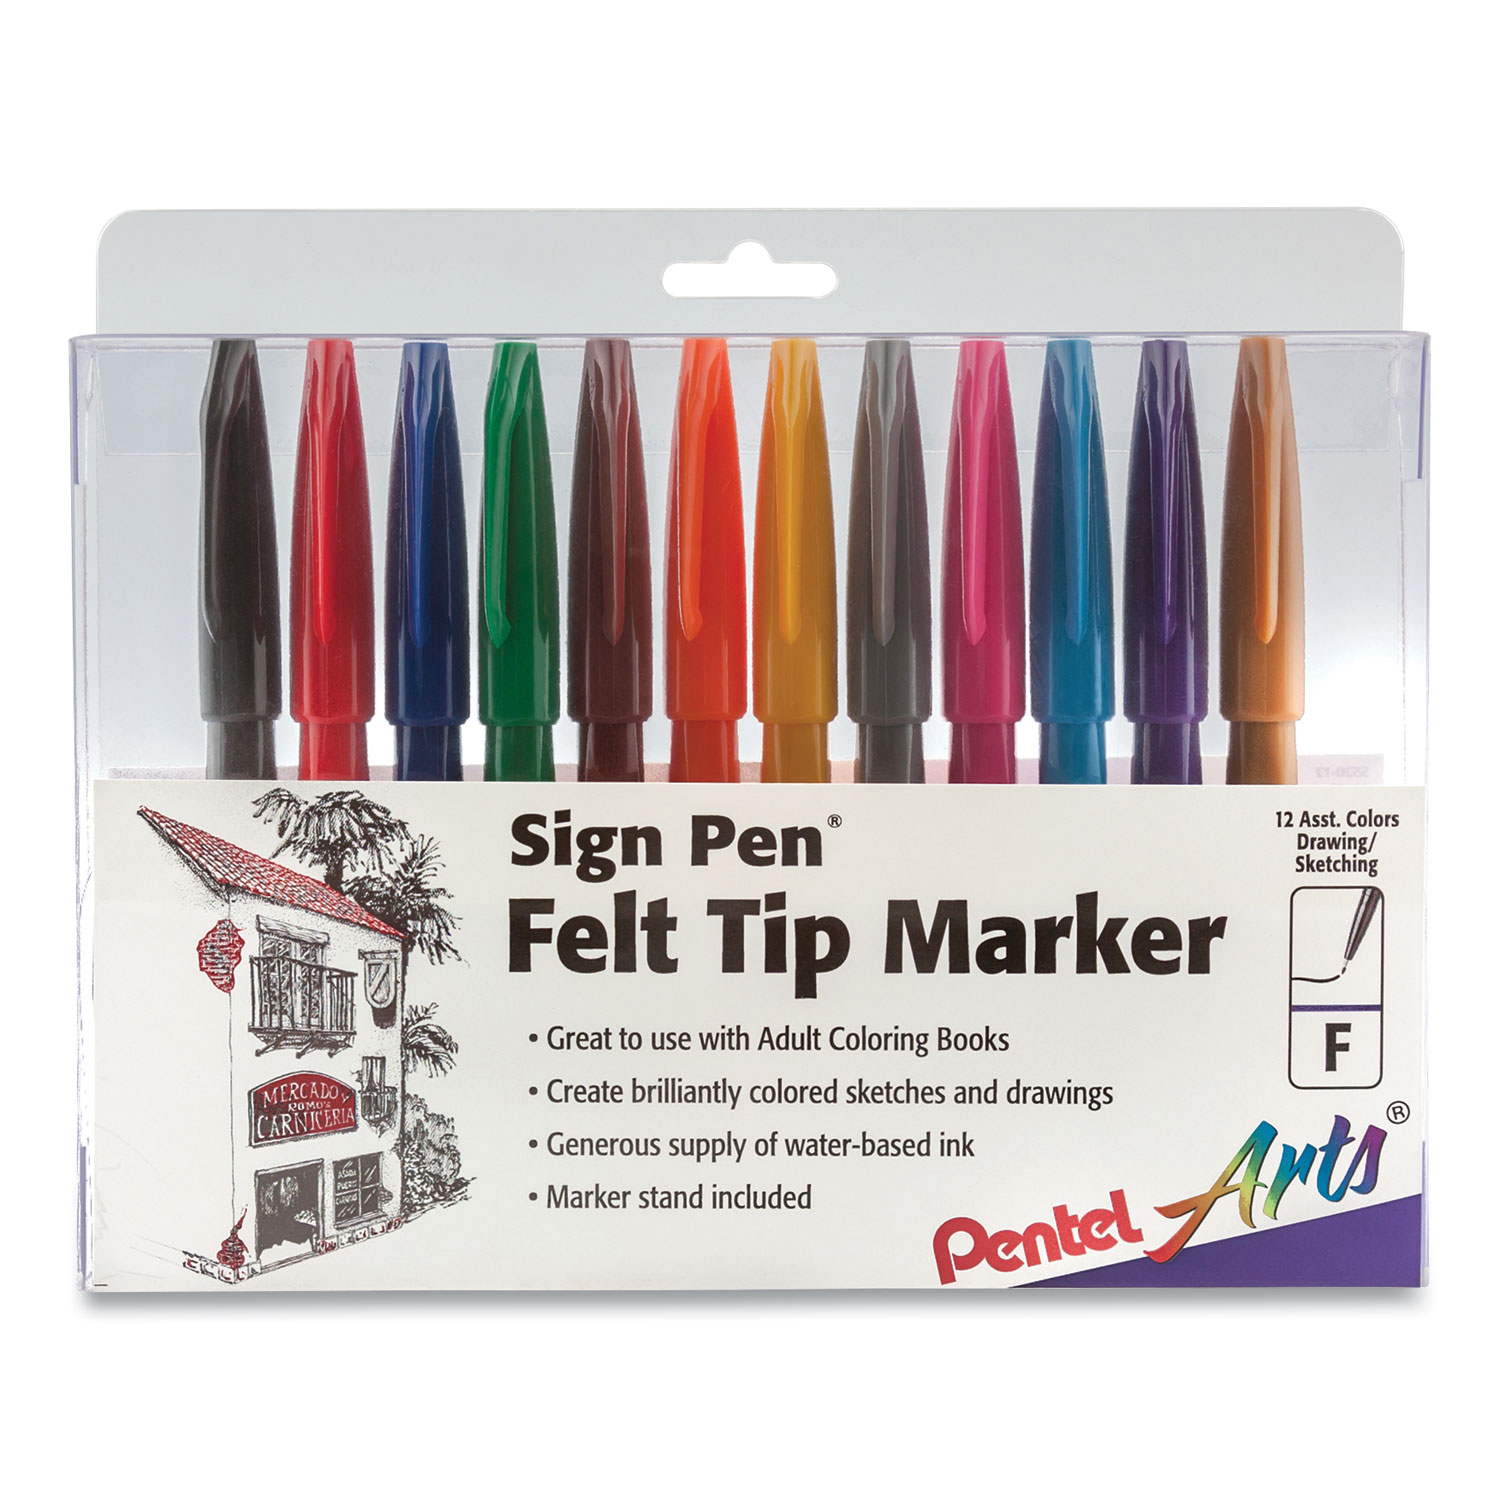 Felt tip pens in coloring books, for beginners 